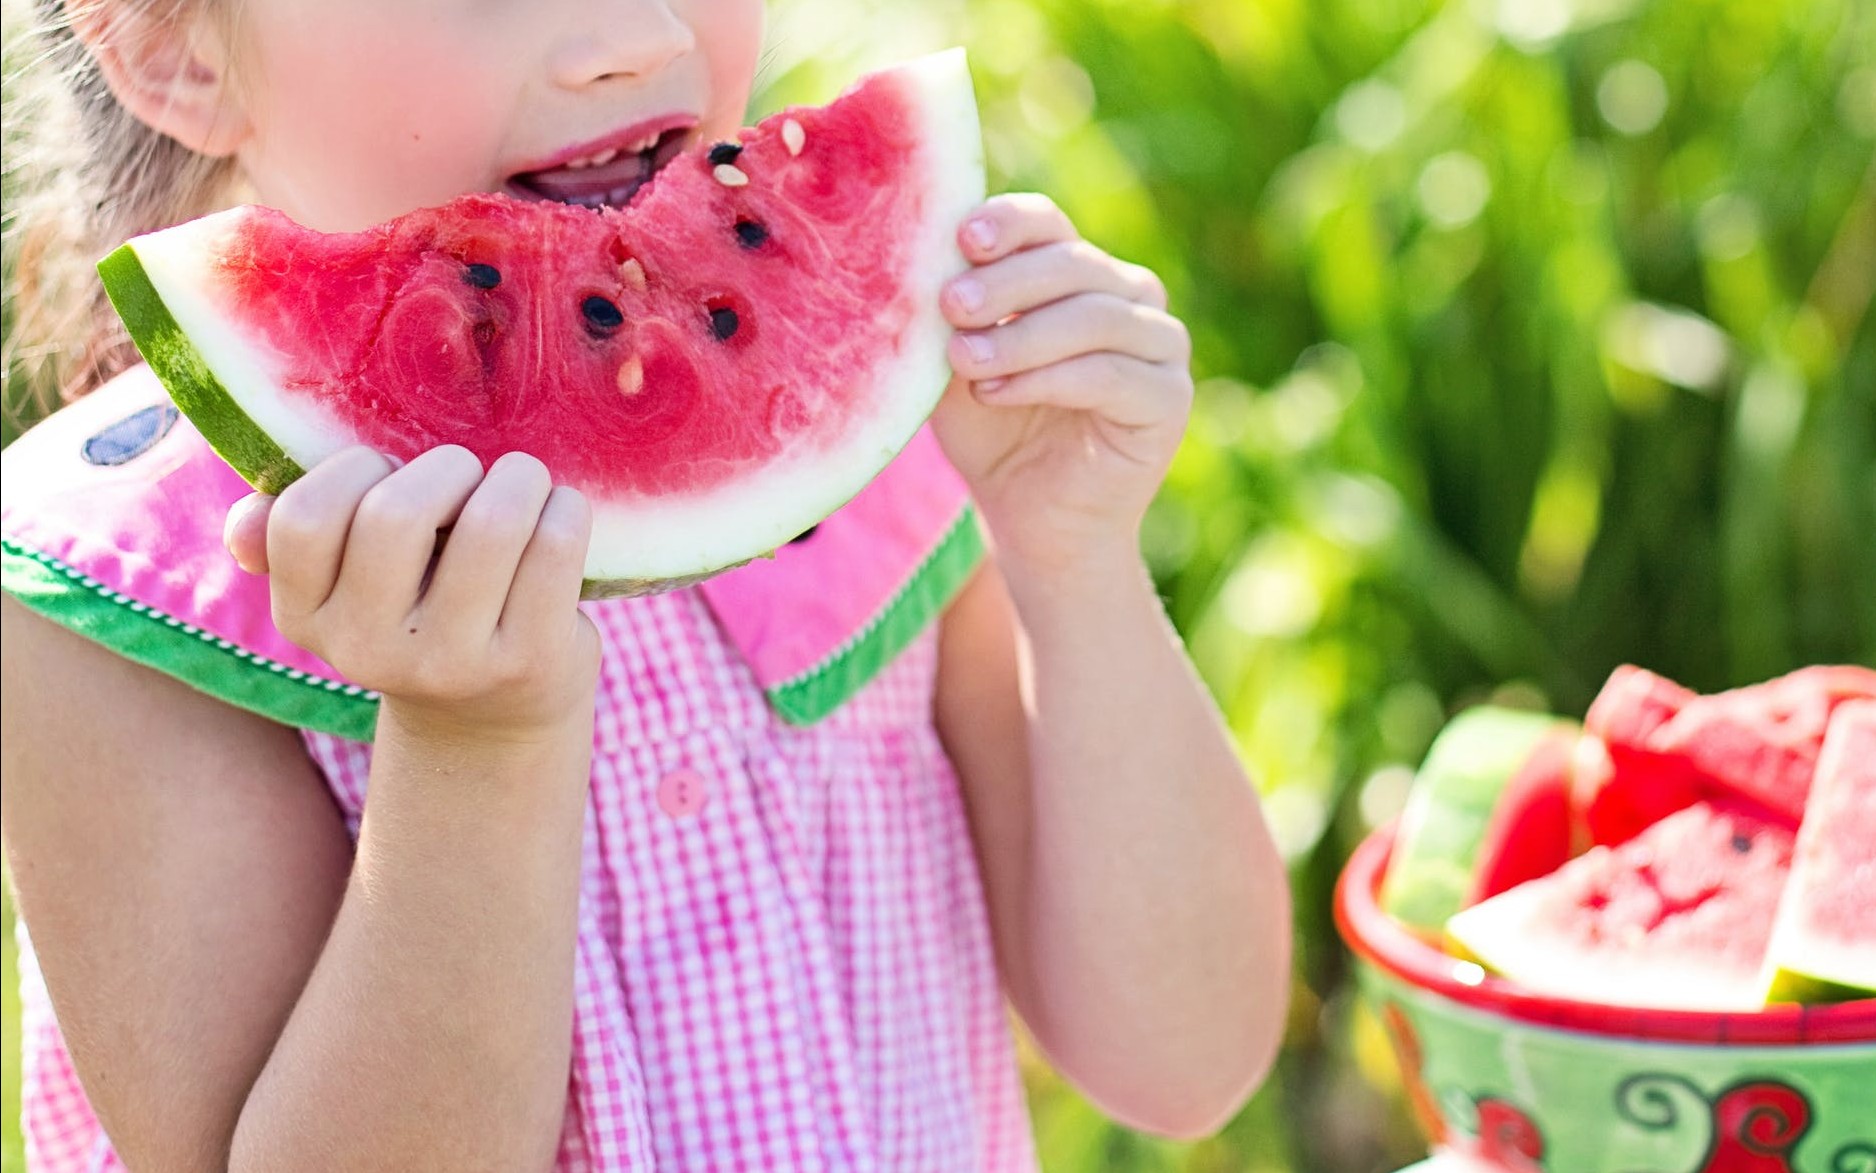 Young Girl Enjoying a Watermelon Slice